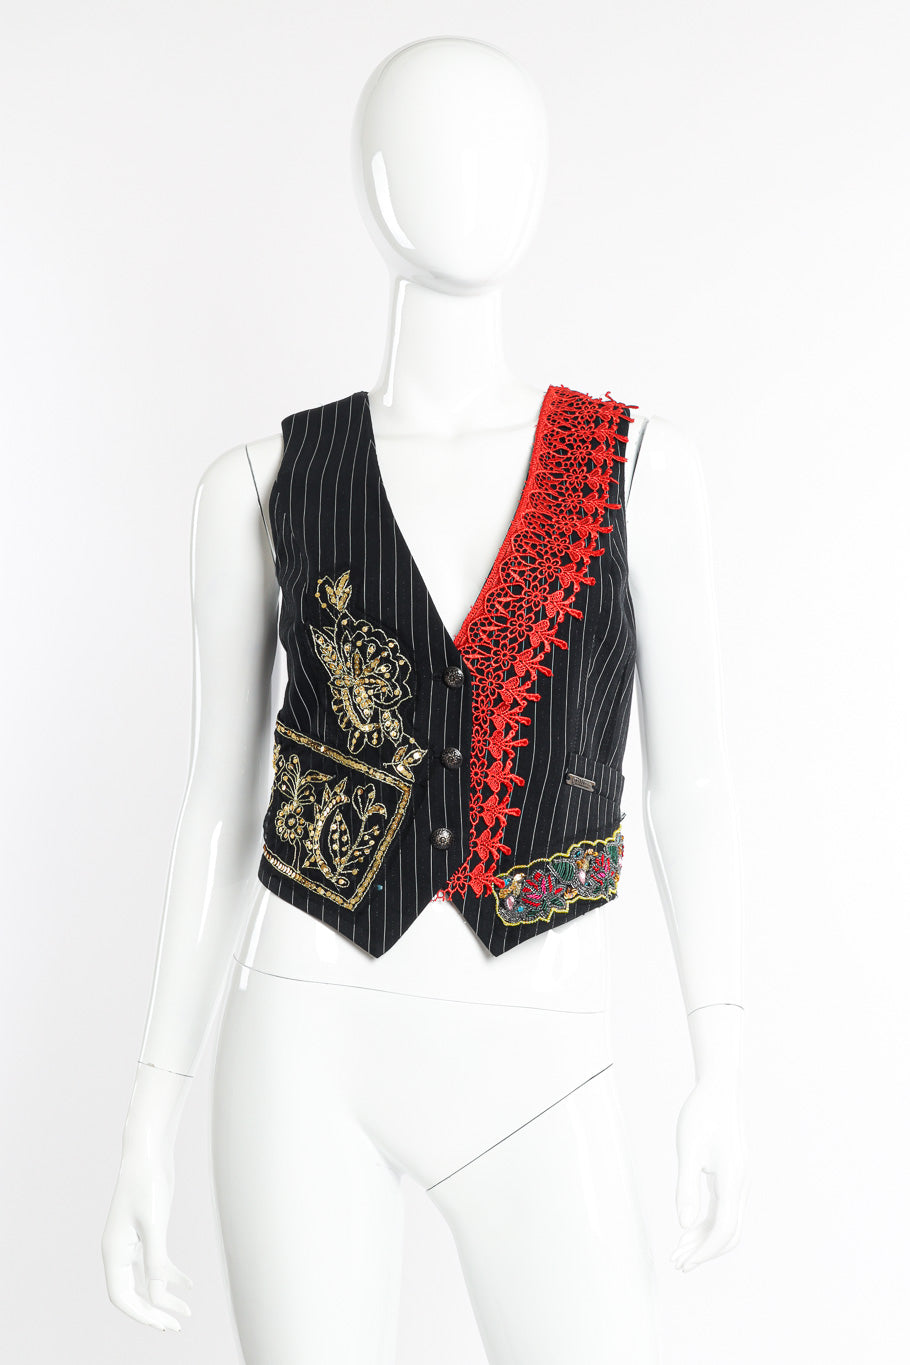 Pinstripe vest by John Galliano on mannequin @recessla